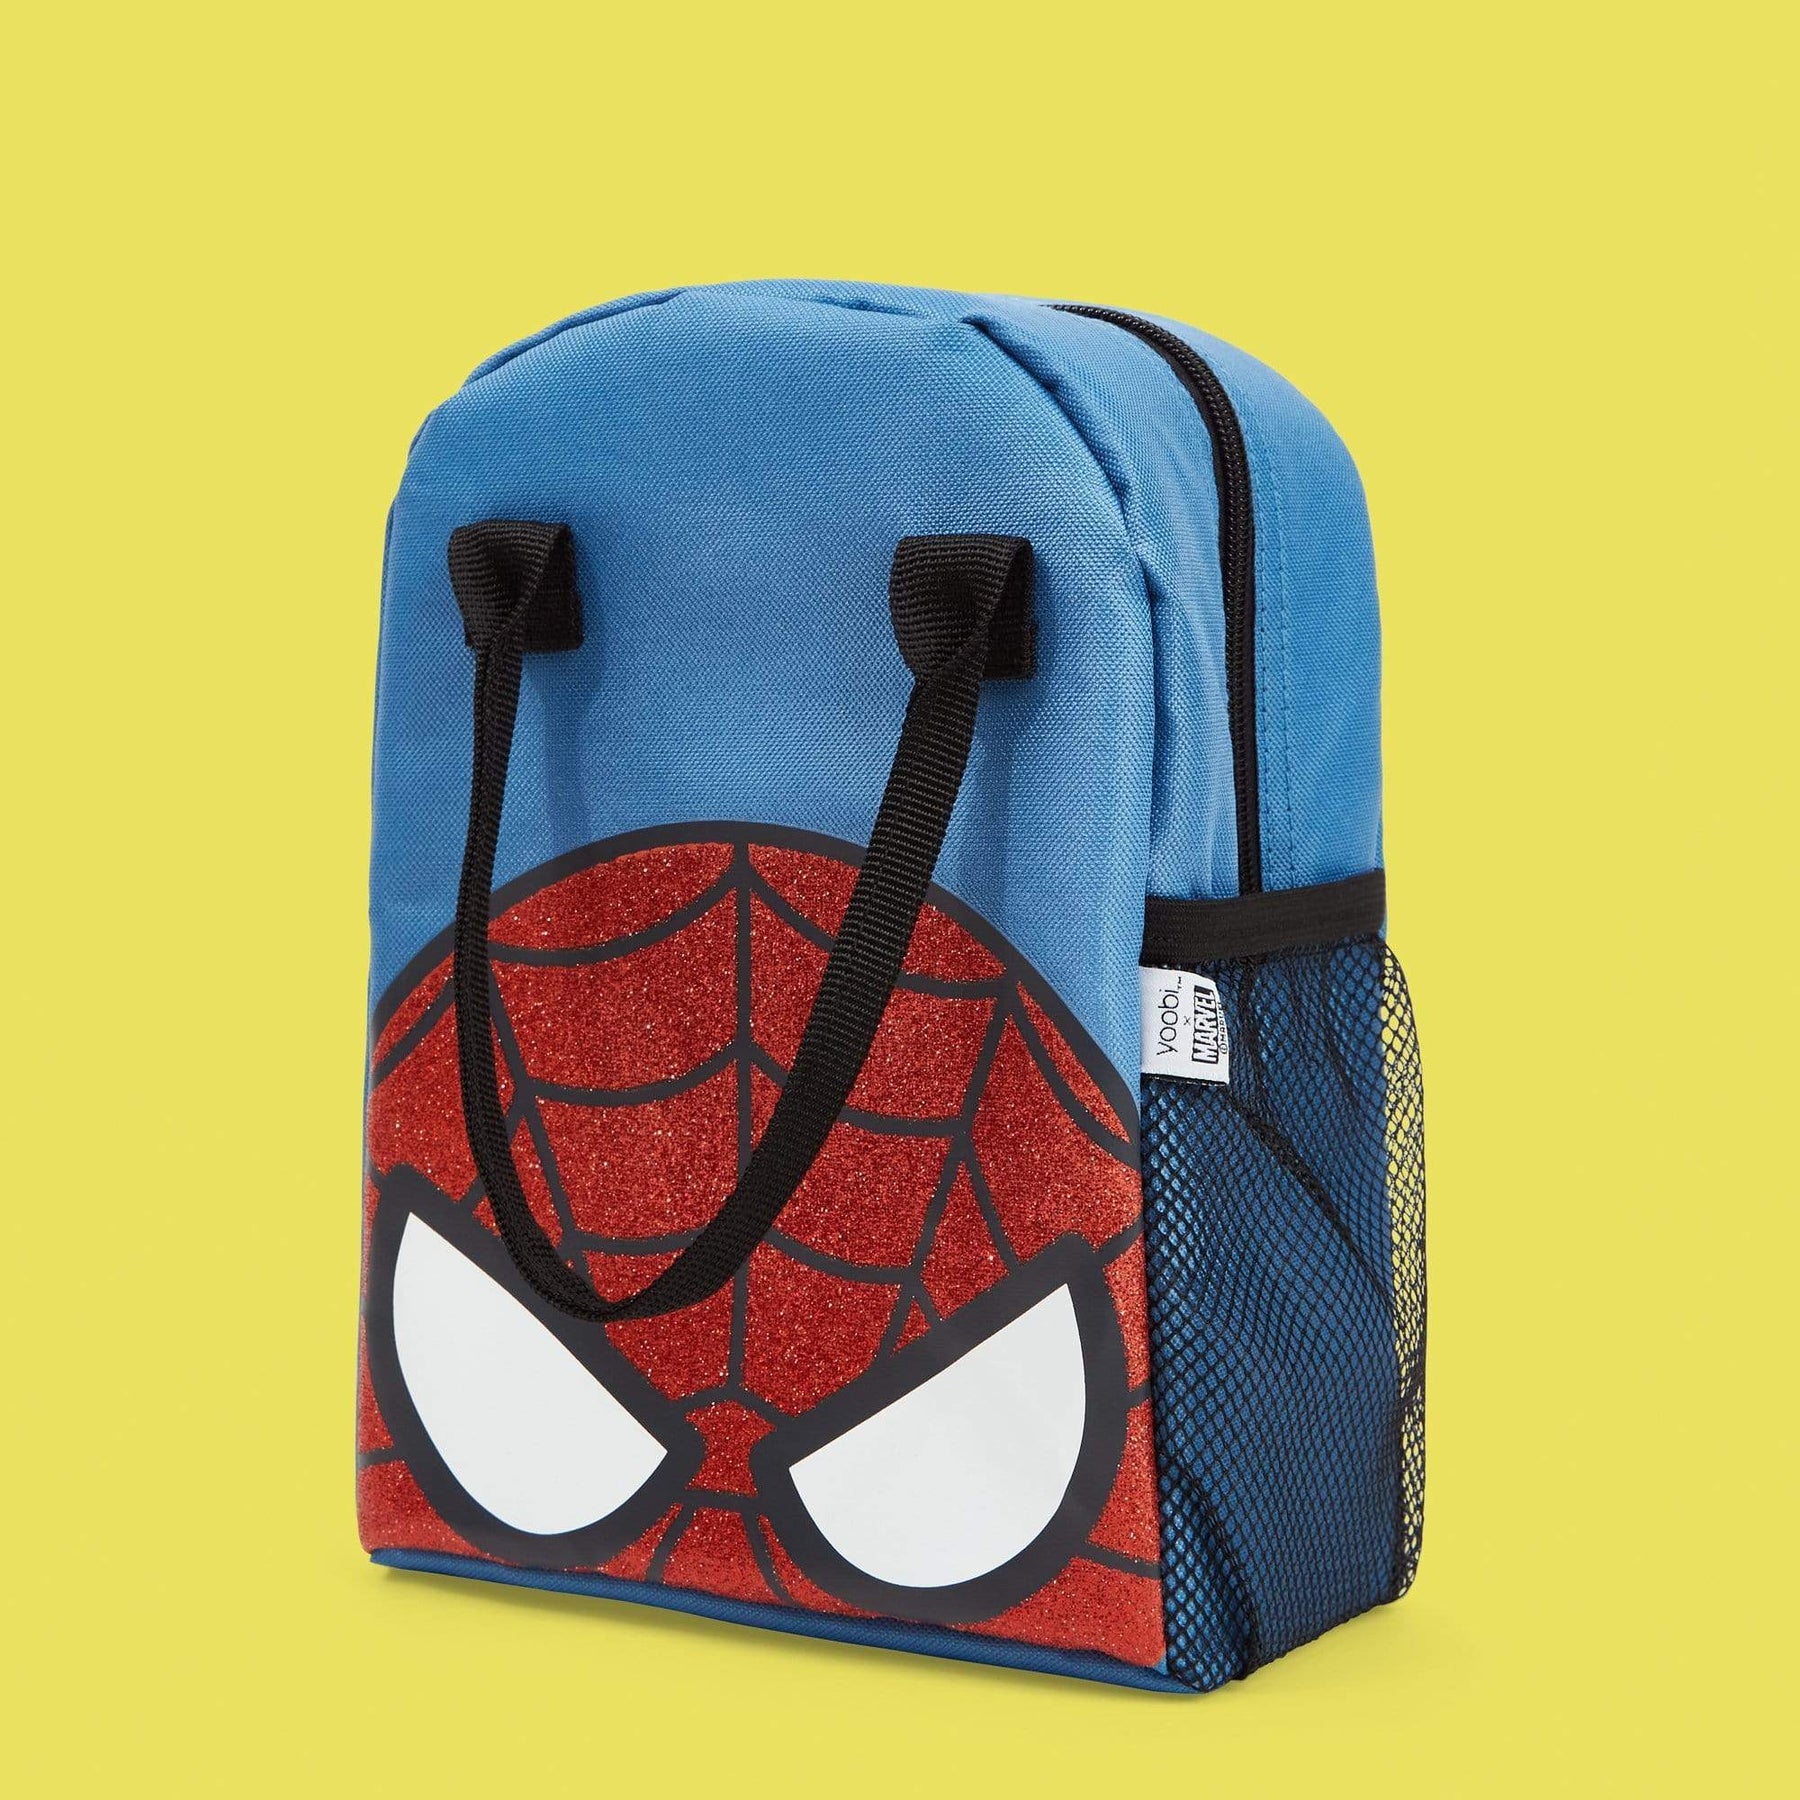 Spider-Man Bento Box – Yoobi